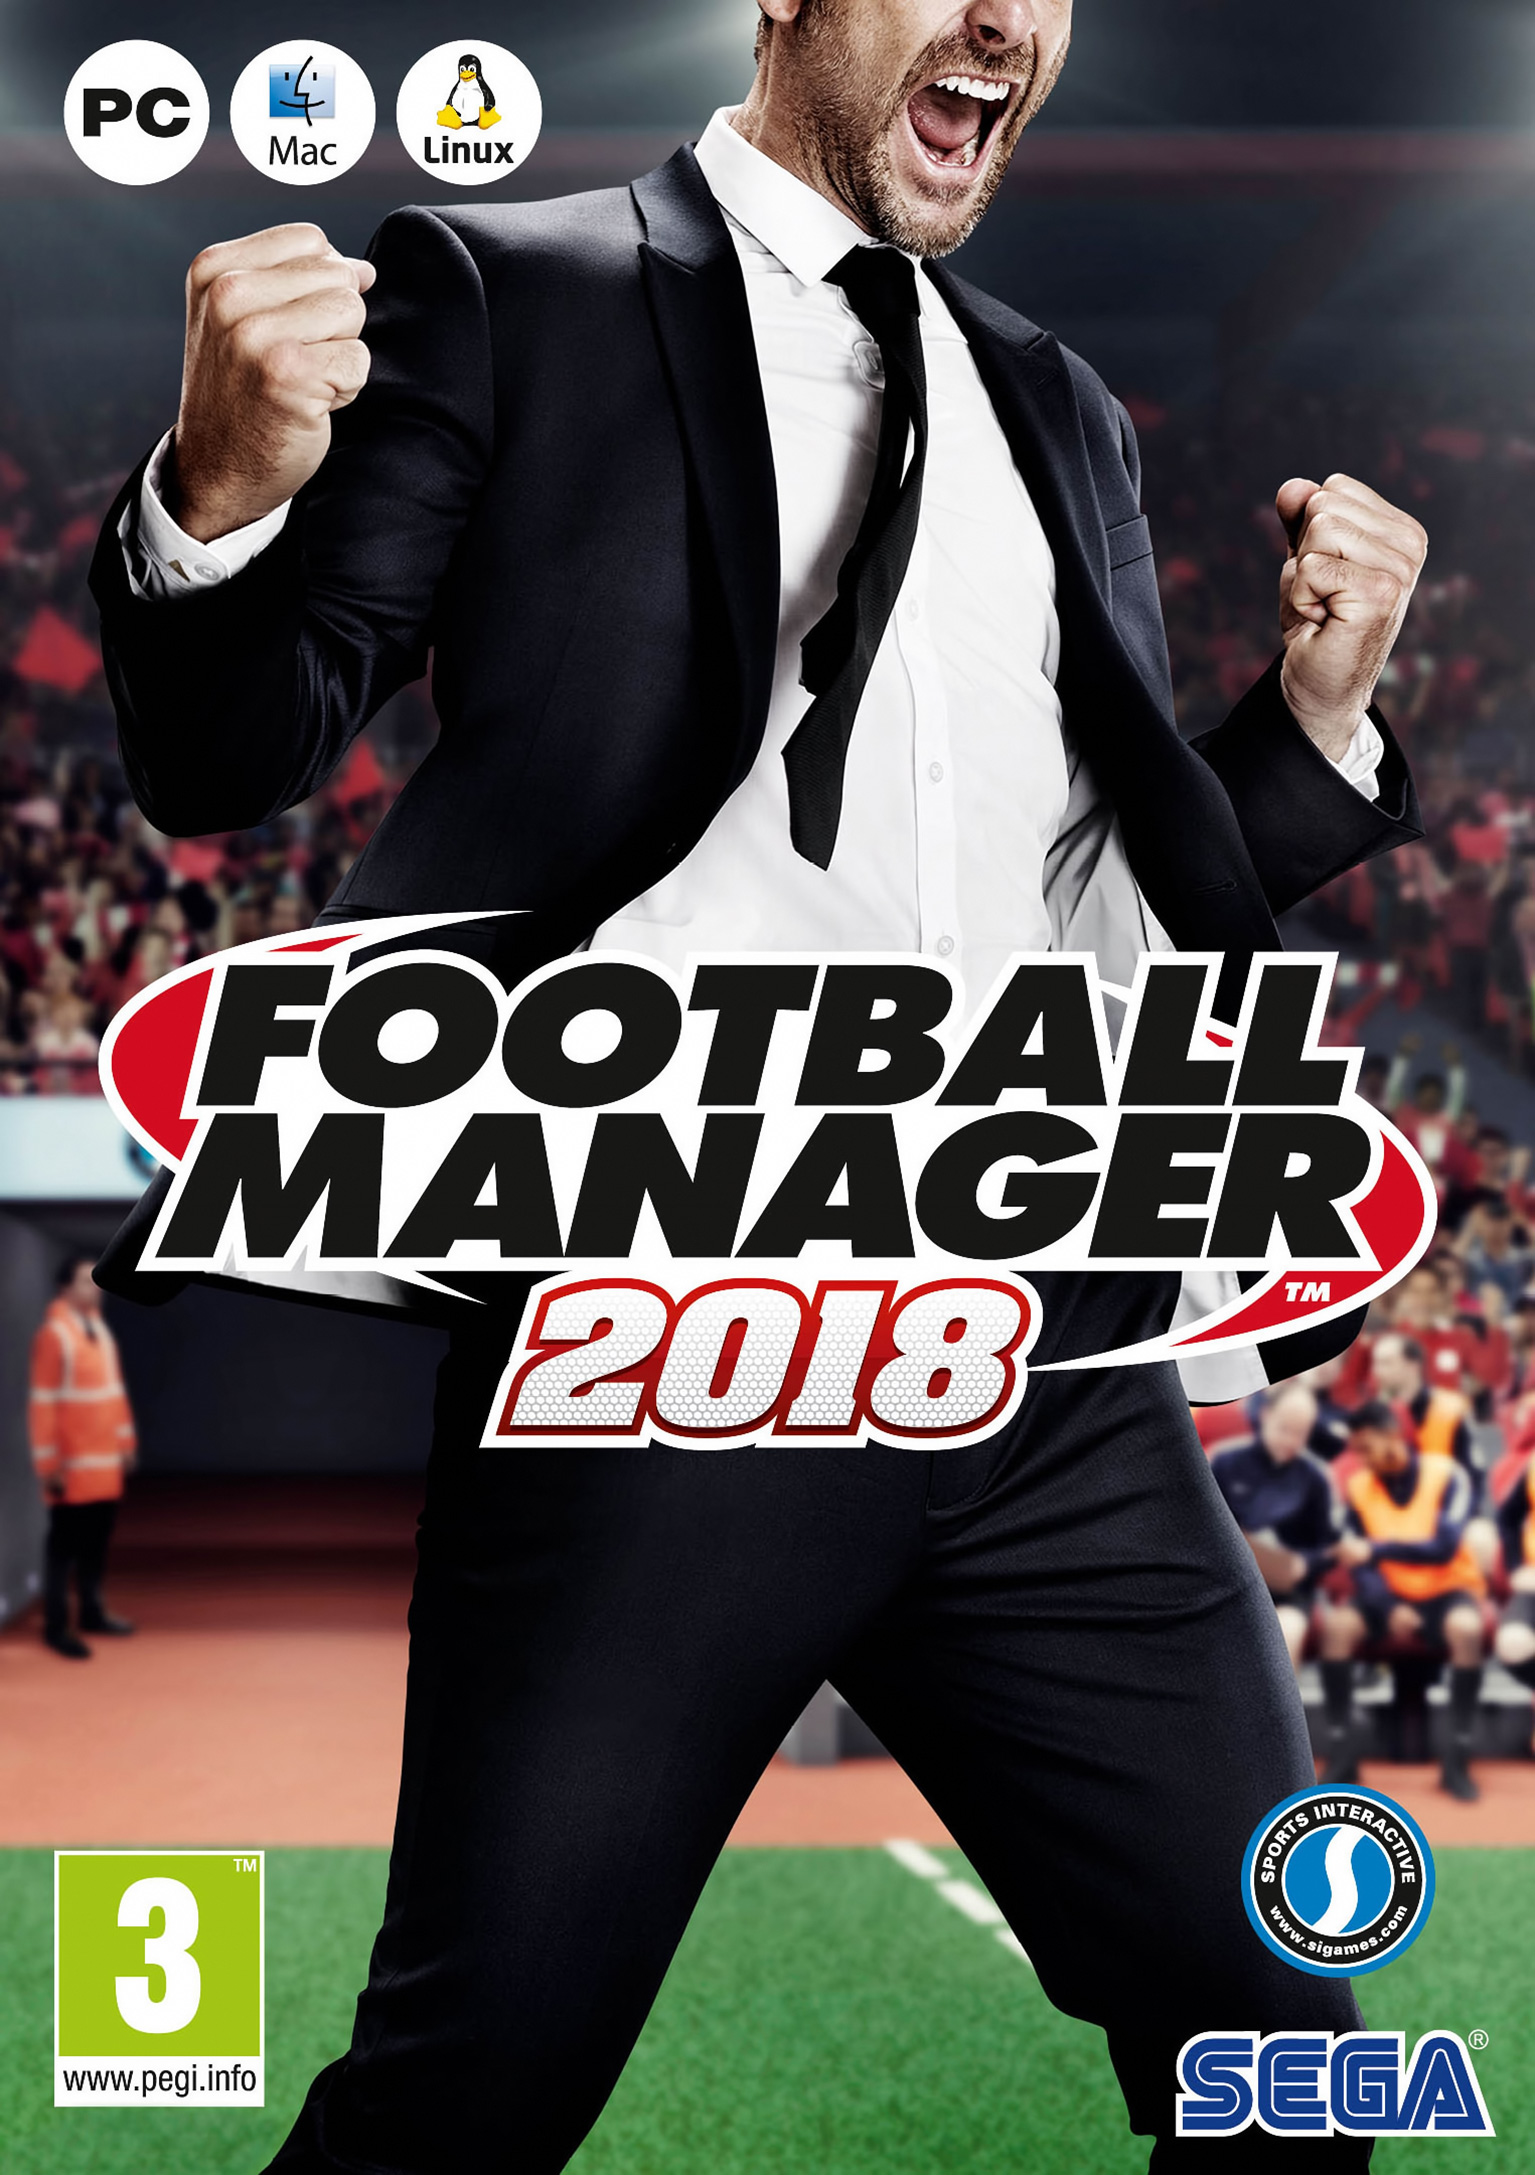 Football Manager 2018 - pedn DVD obal